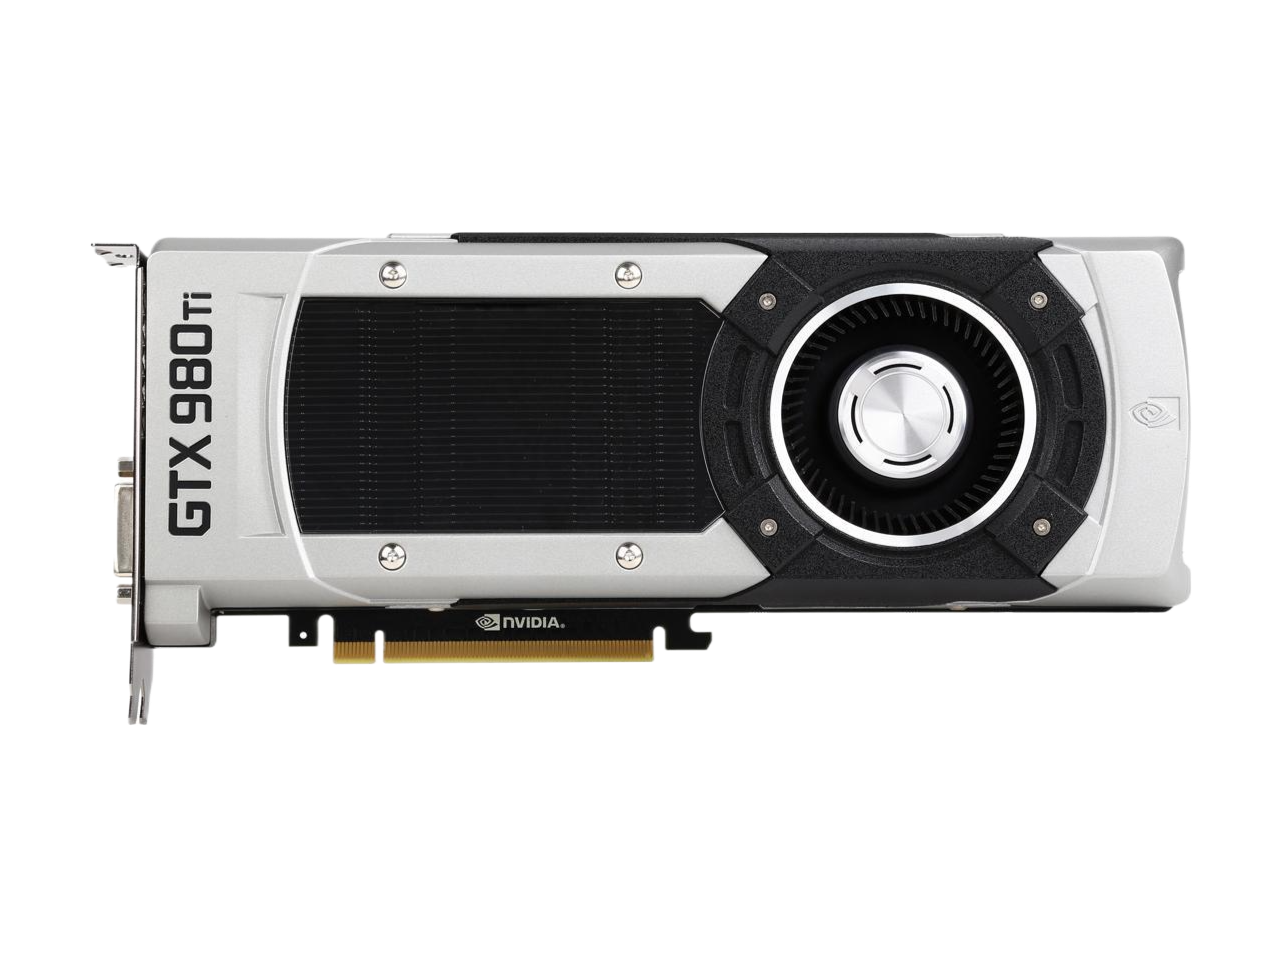 EVGA GeForce GTX 980 Ti 6GB GDDR5 PCI Express 3.0 x16 SLI Support VR  EDITION GAMING Video Card 06G-P4-3998-KR